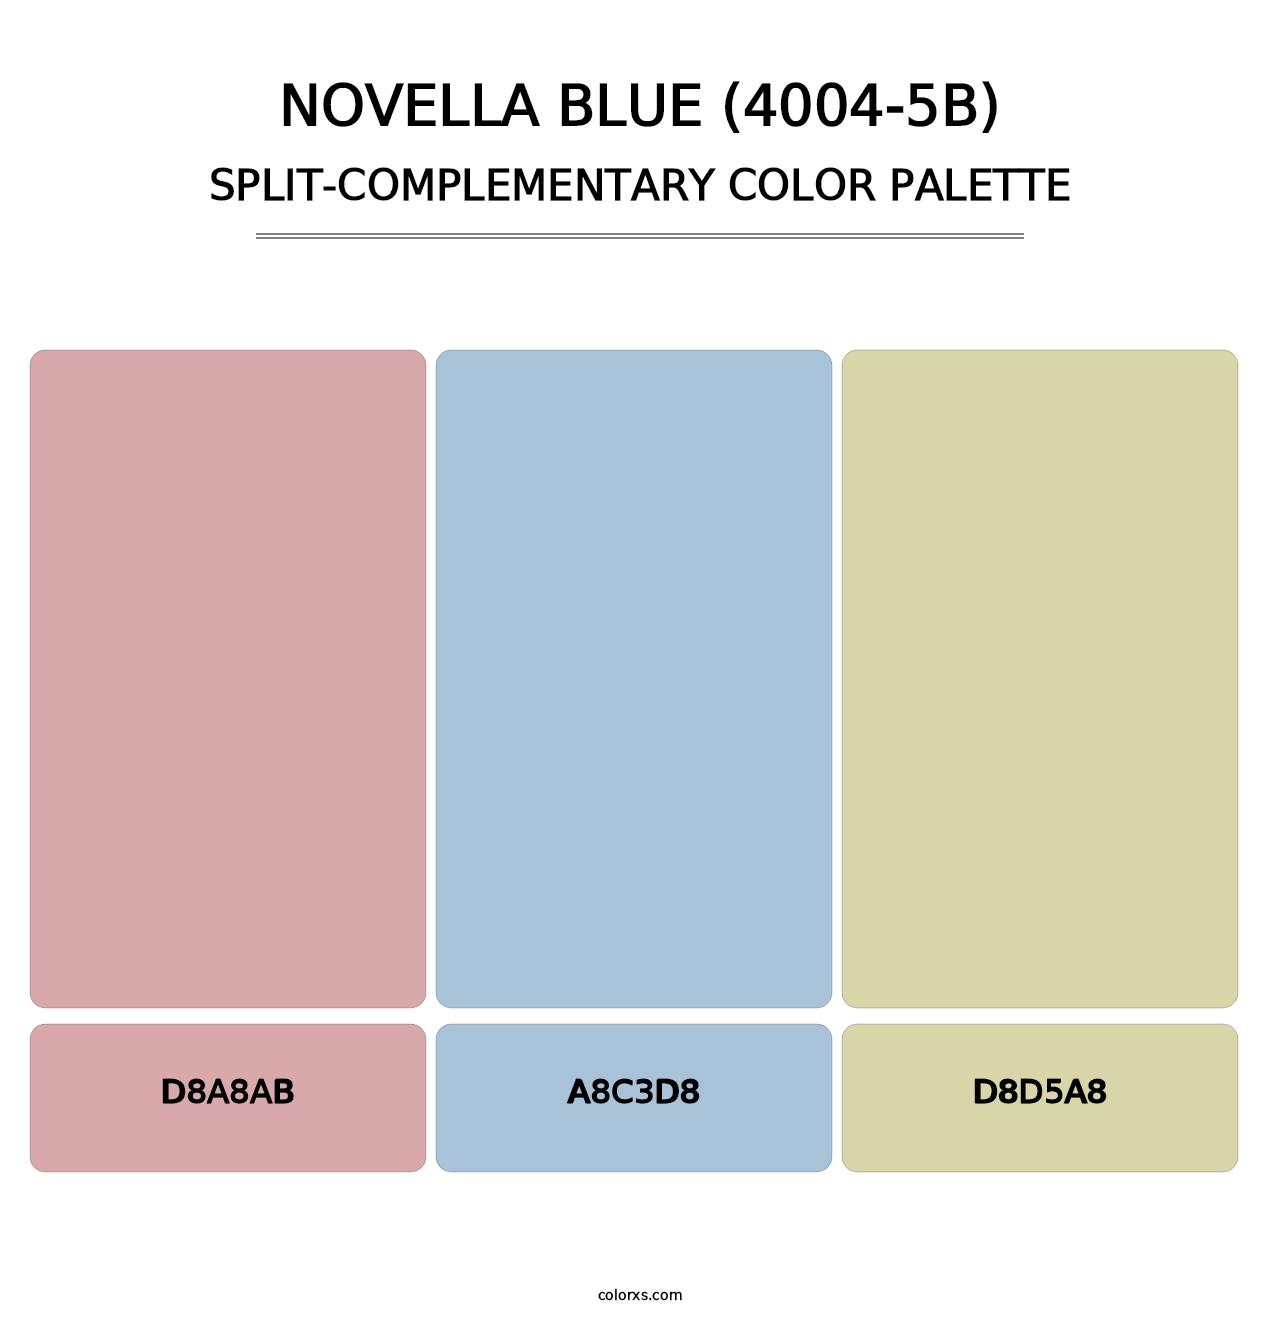 Novella Blue (4004-5B) - Split-Complementary Color Palette